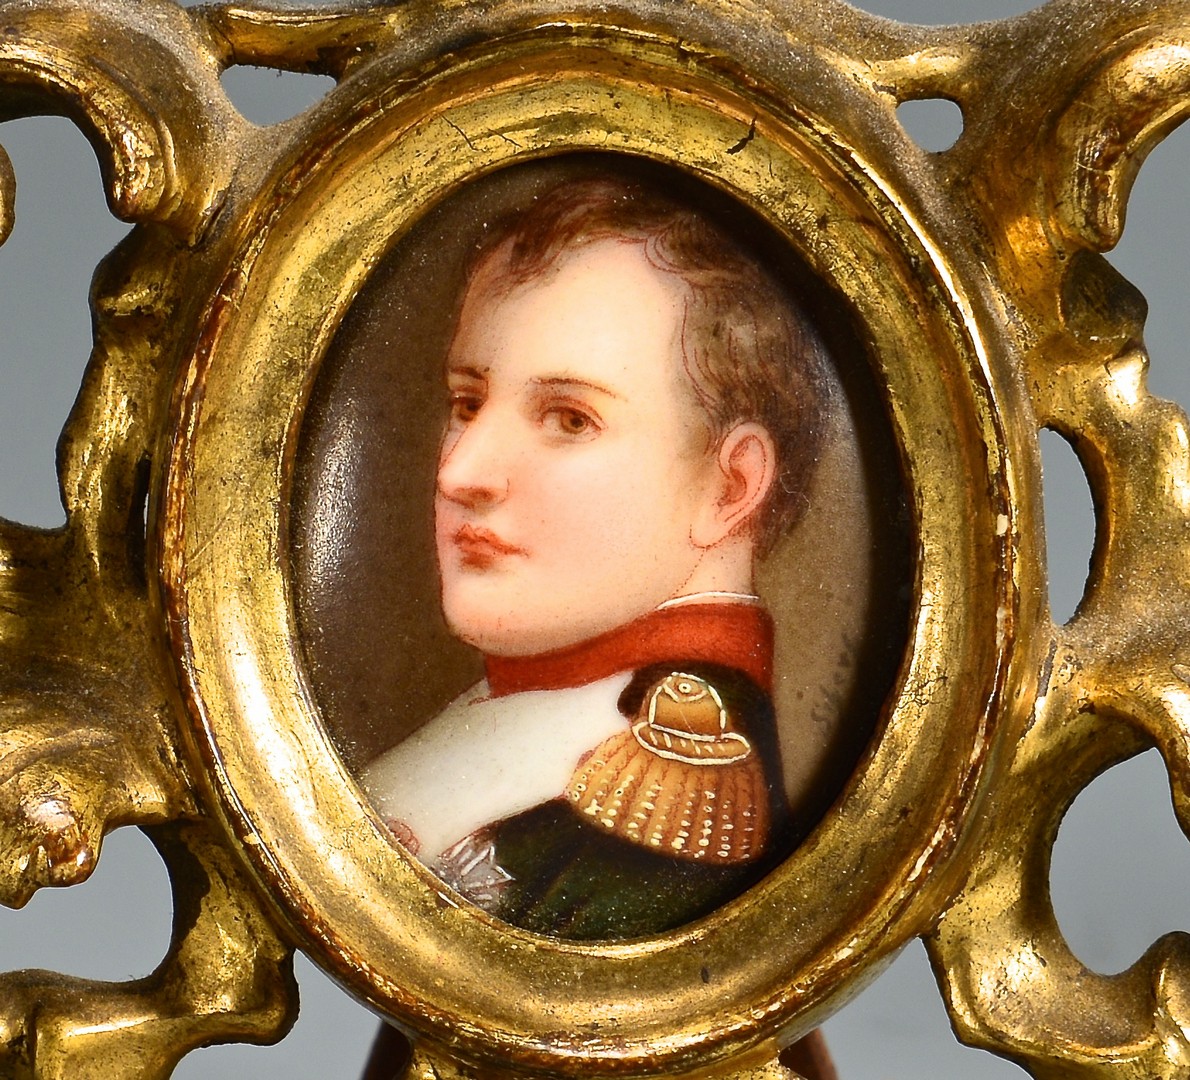 Lot 481: Napoleon portrait, 2 soldier figures and stein